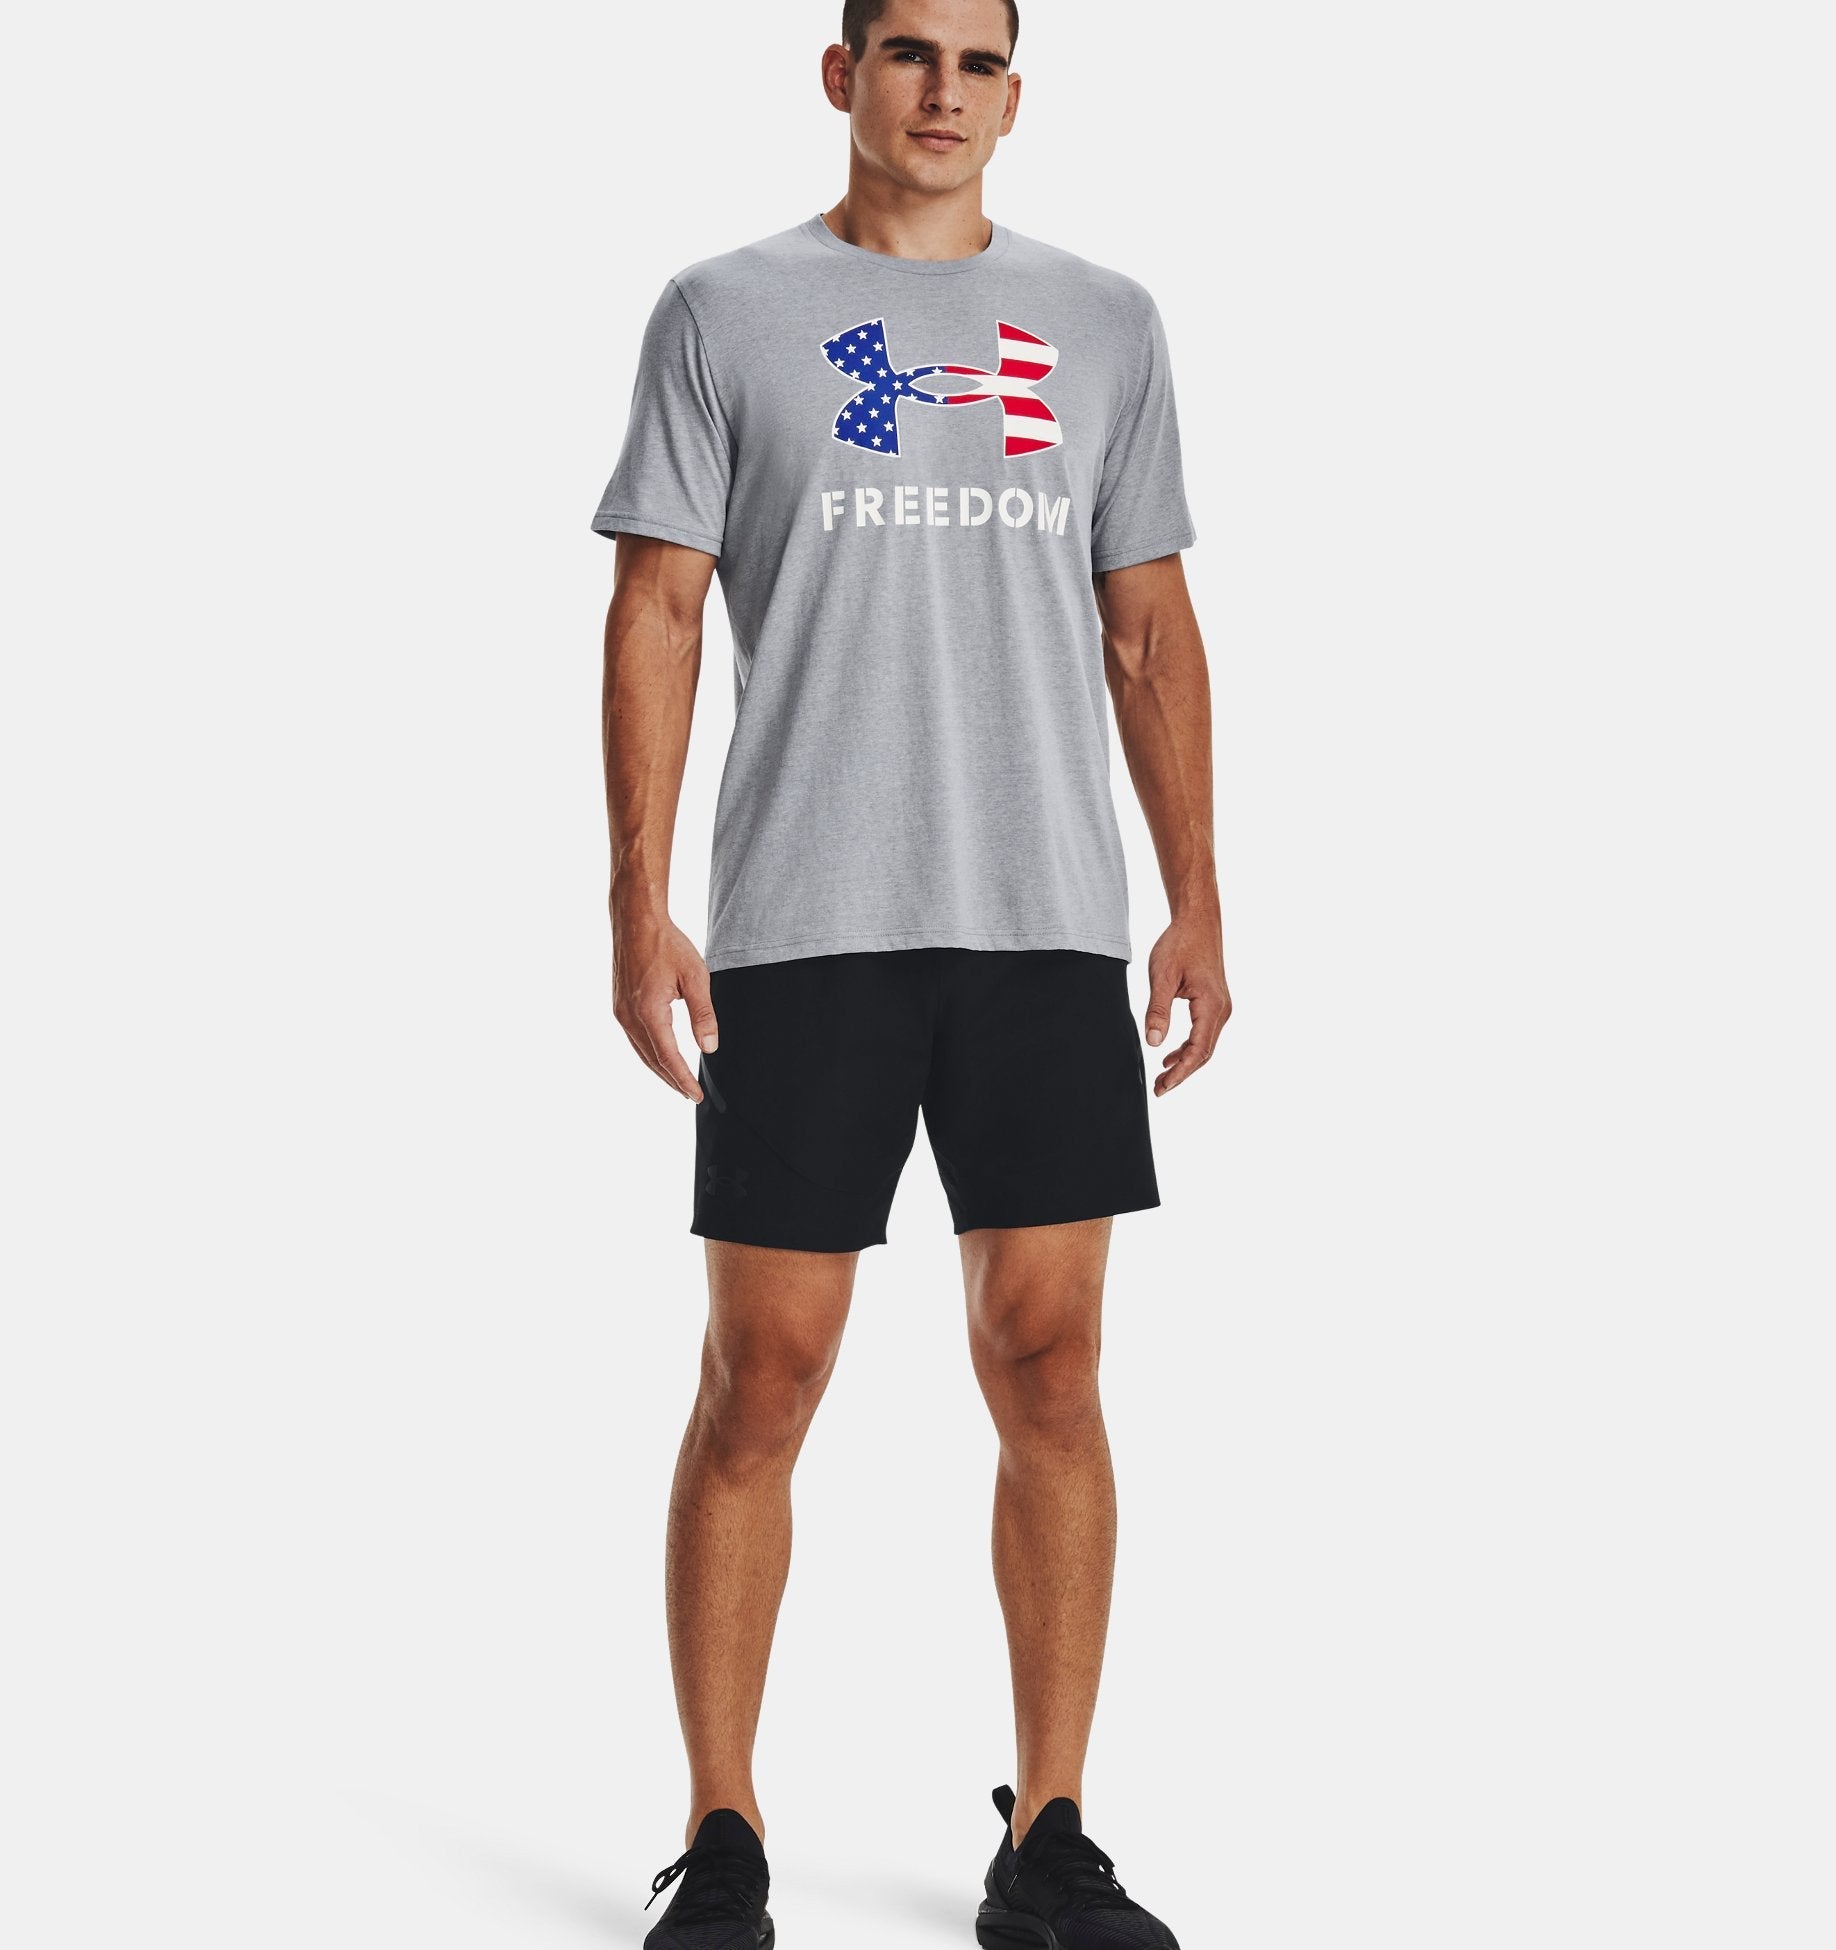 Under Armour New Freedom Logo T-Shirt (Grey)